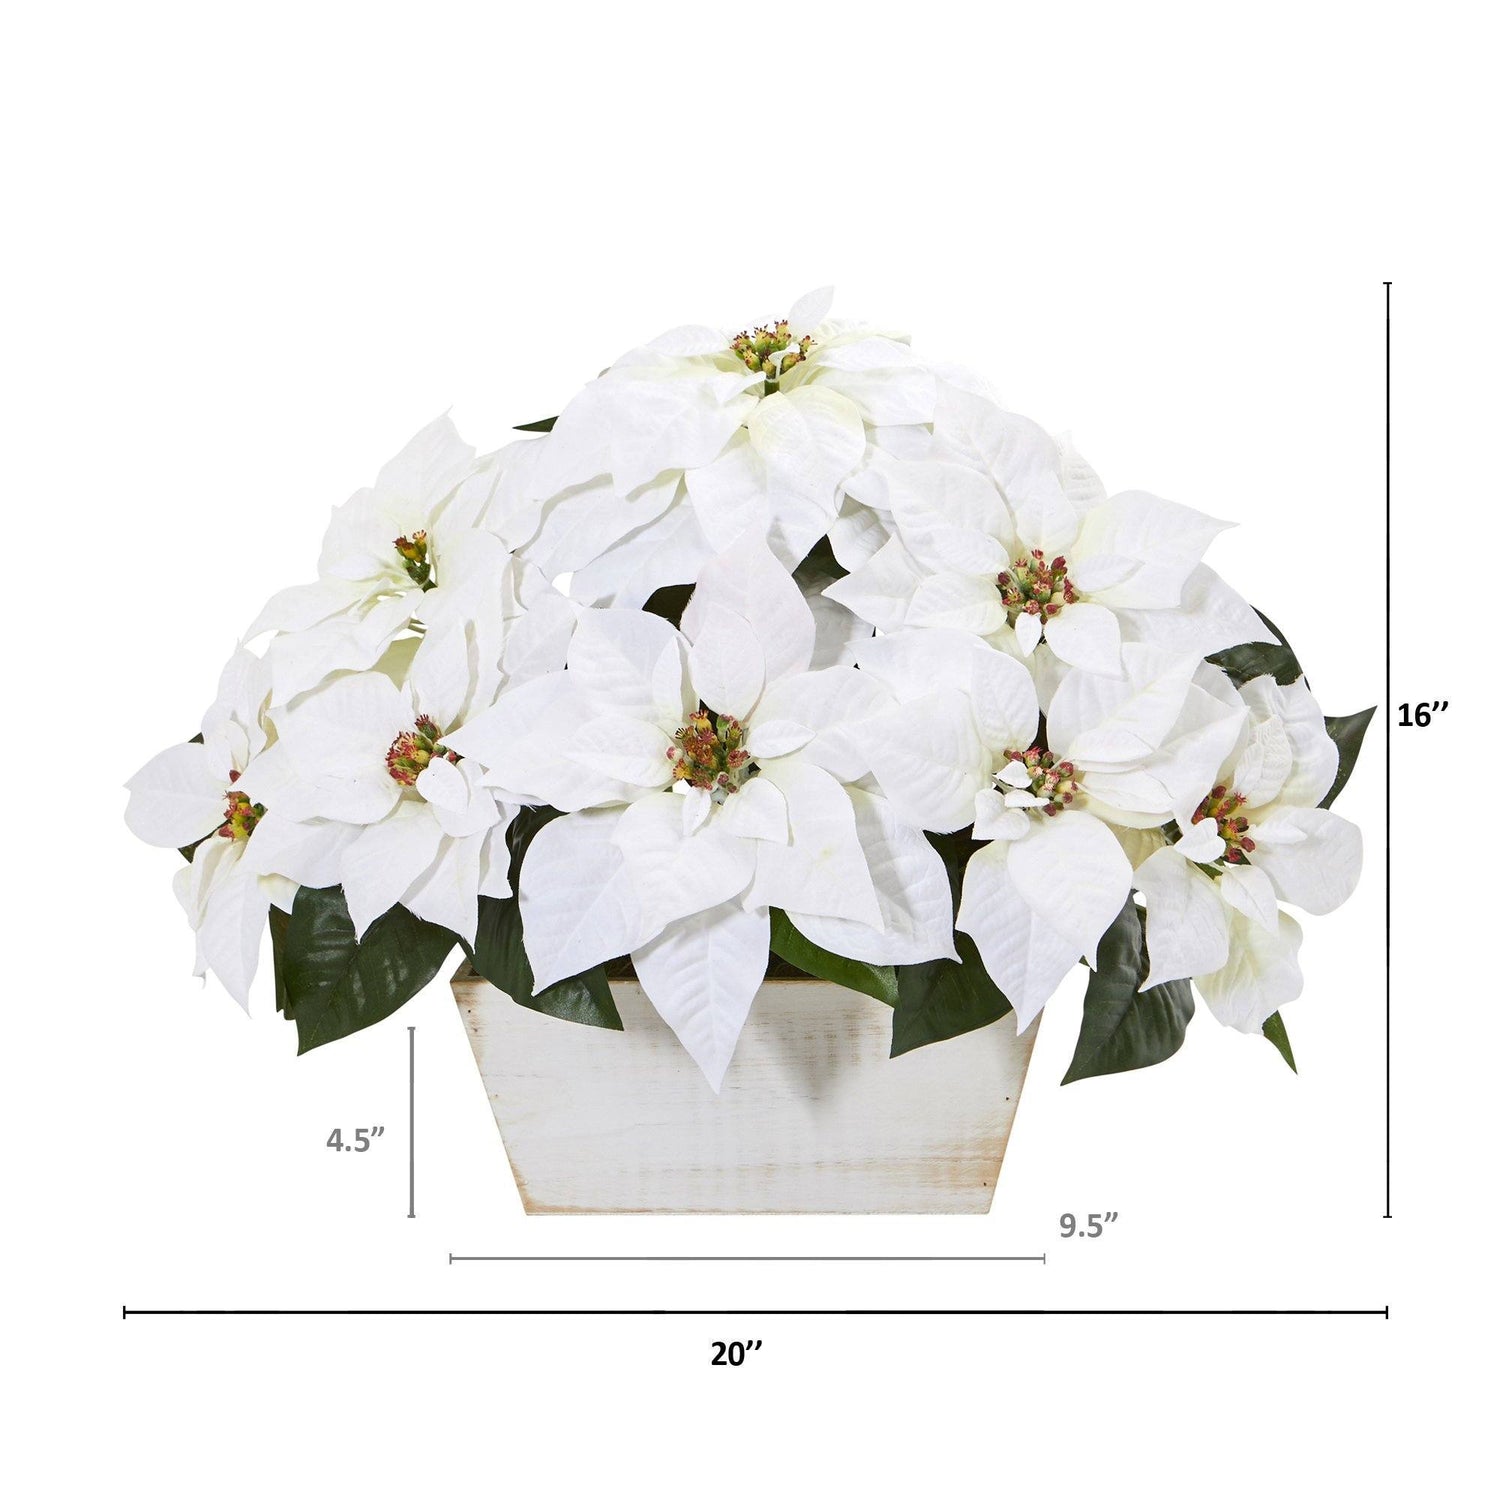 16” Poinsettia Artificial Arrangement in White Wash Planter